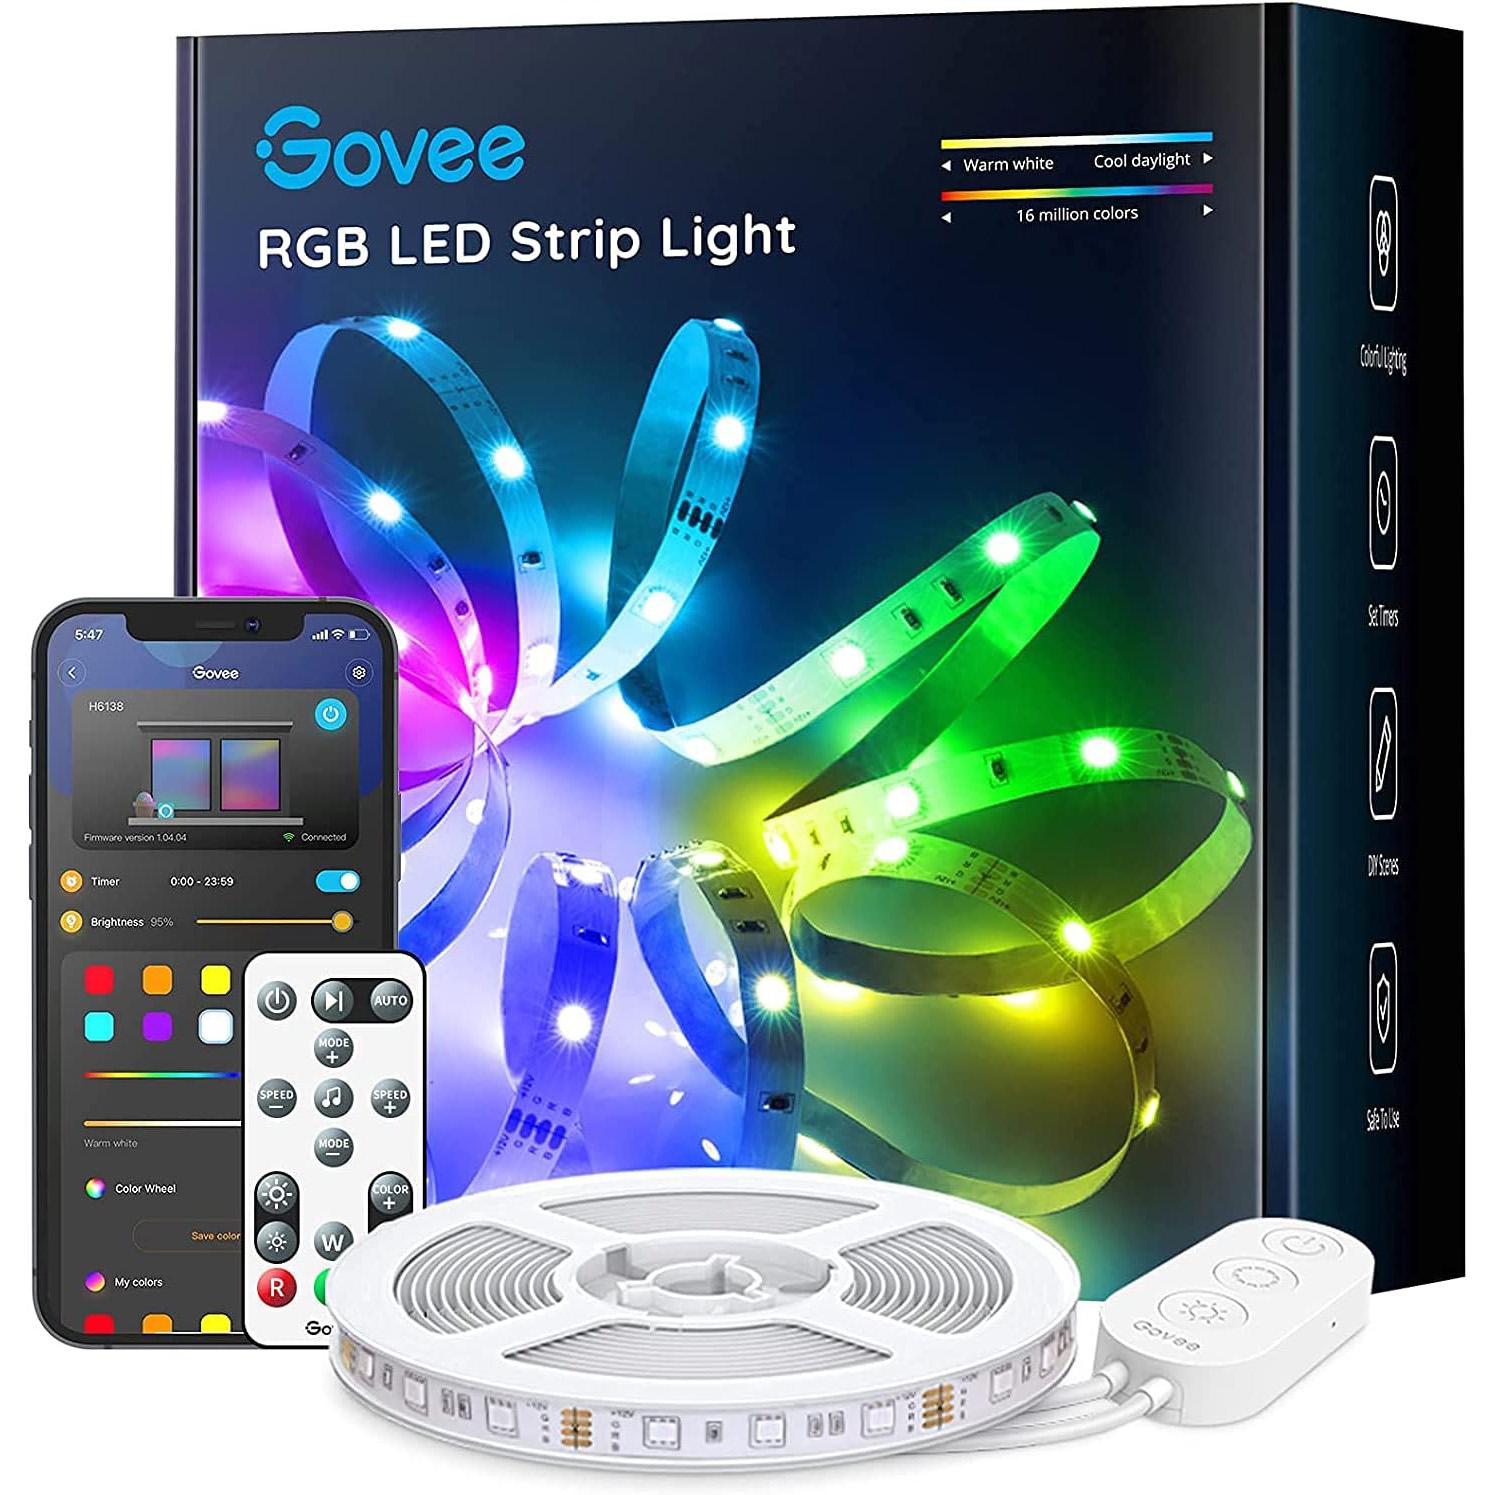 Govee Color Changing LED Strip Lights for $9.89